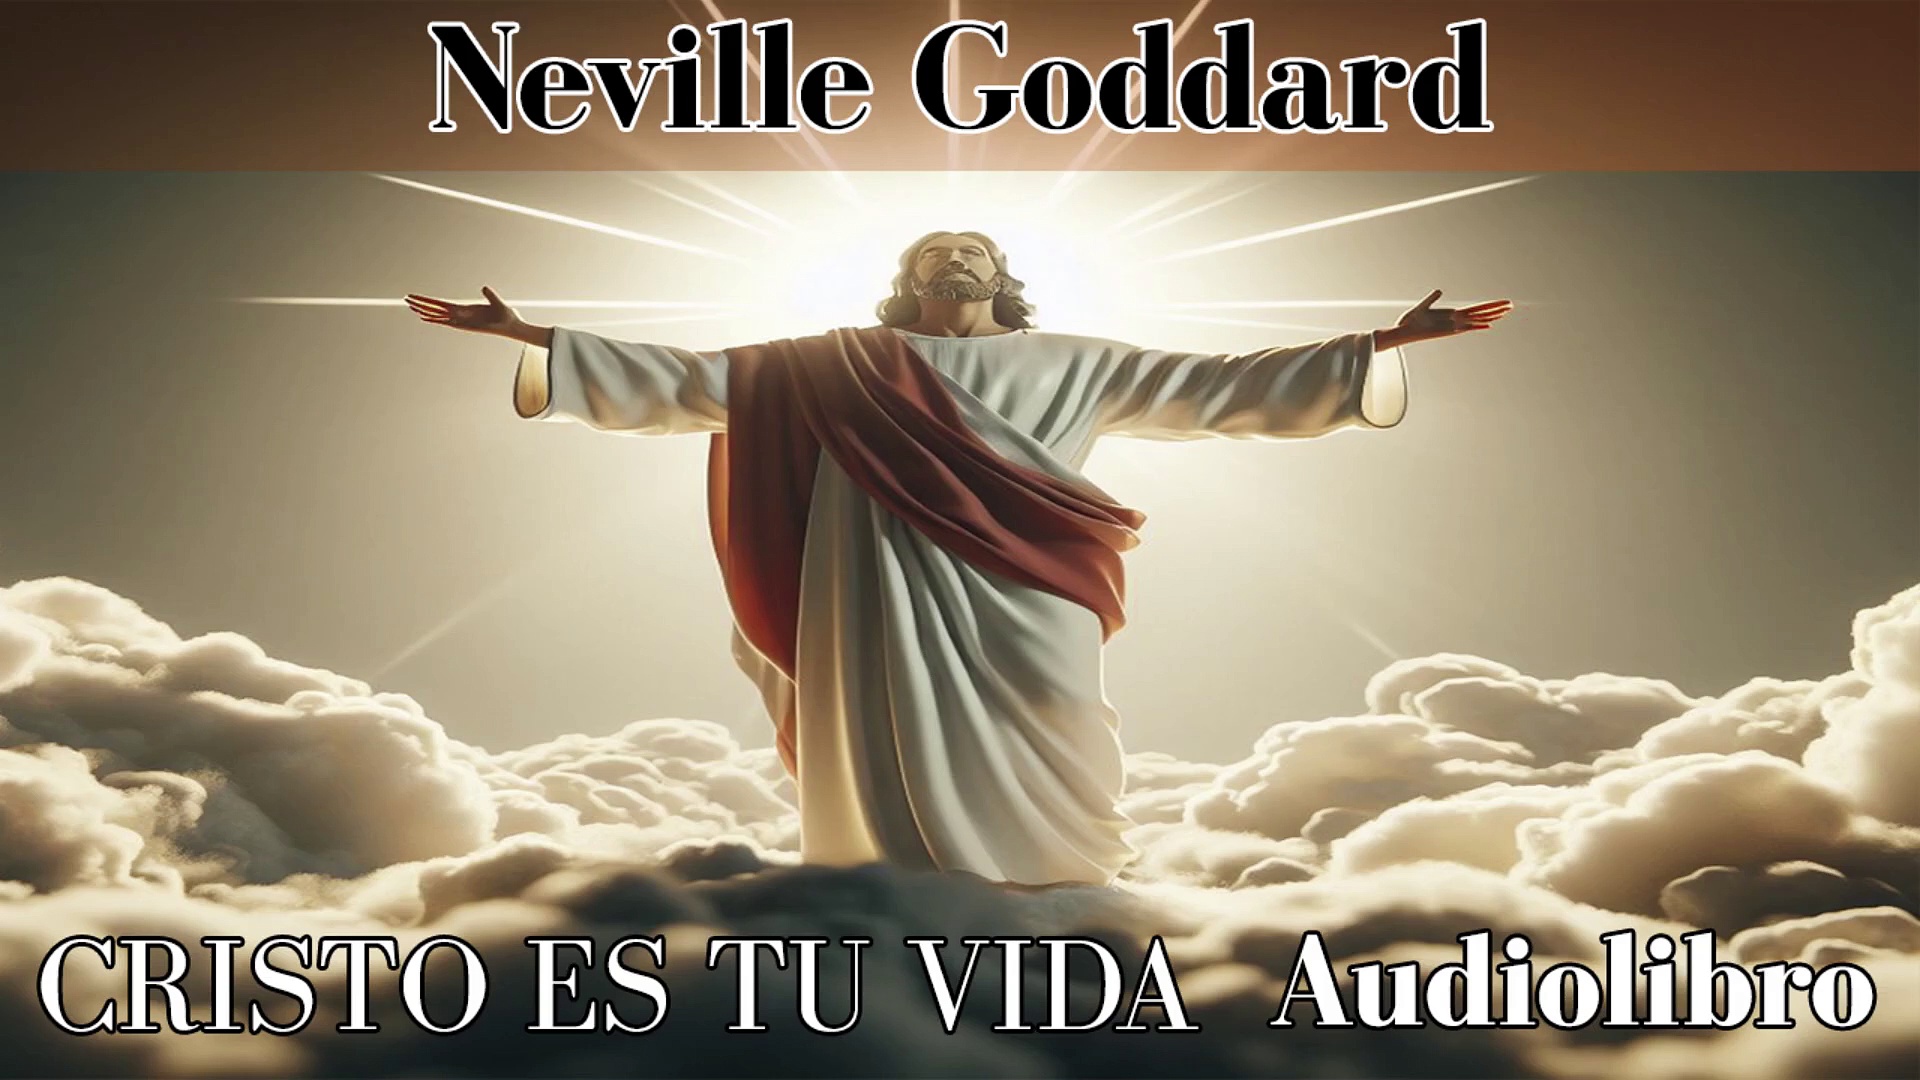 CRISTO ES TU VIDA – AUDIOLIBRO – NEVILLE GODDARD